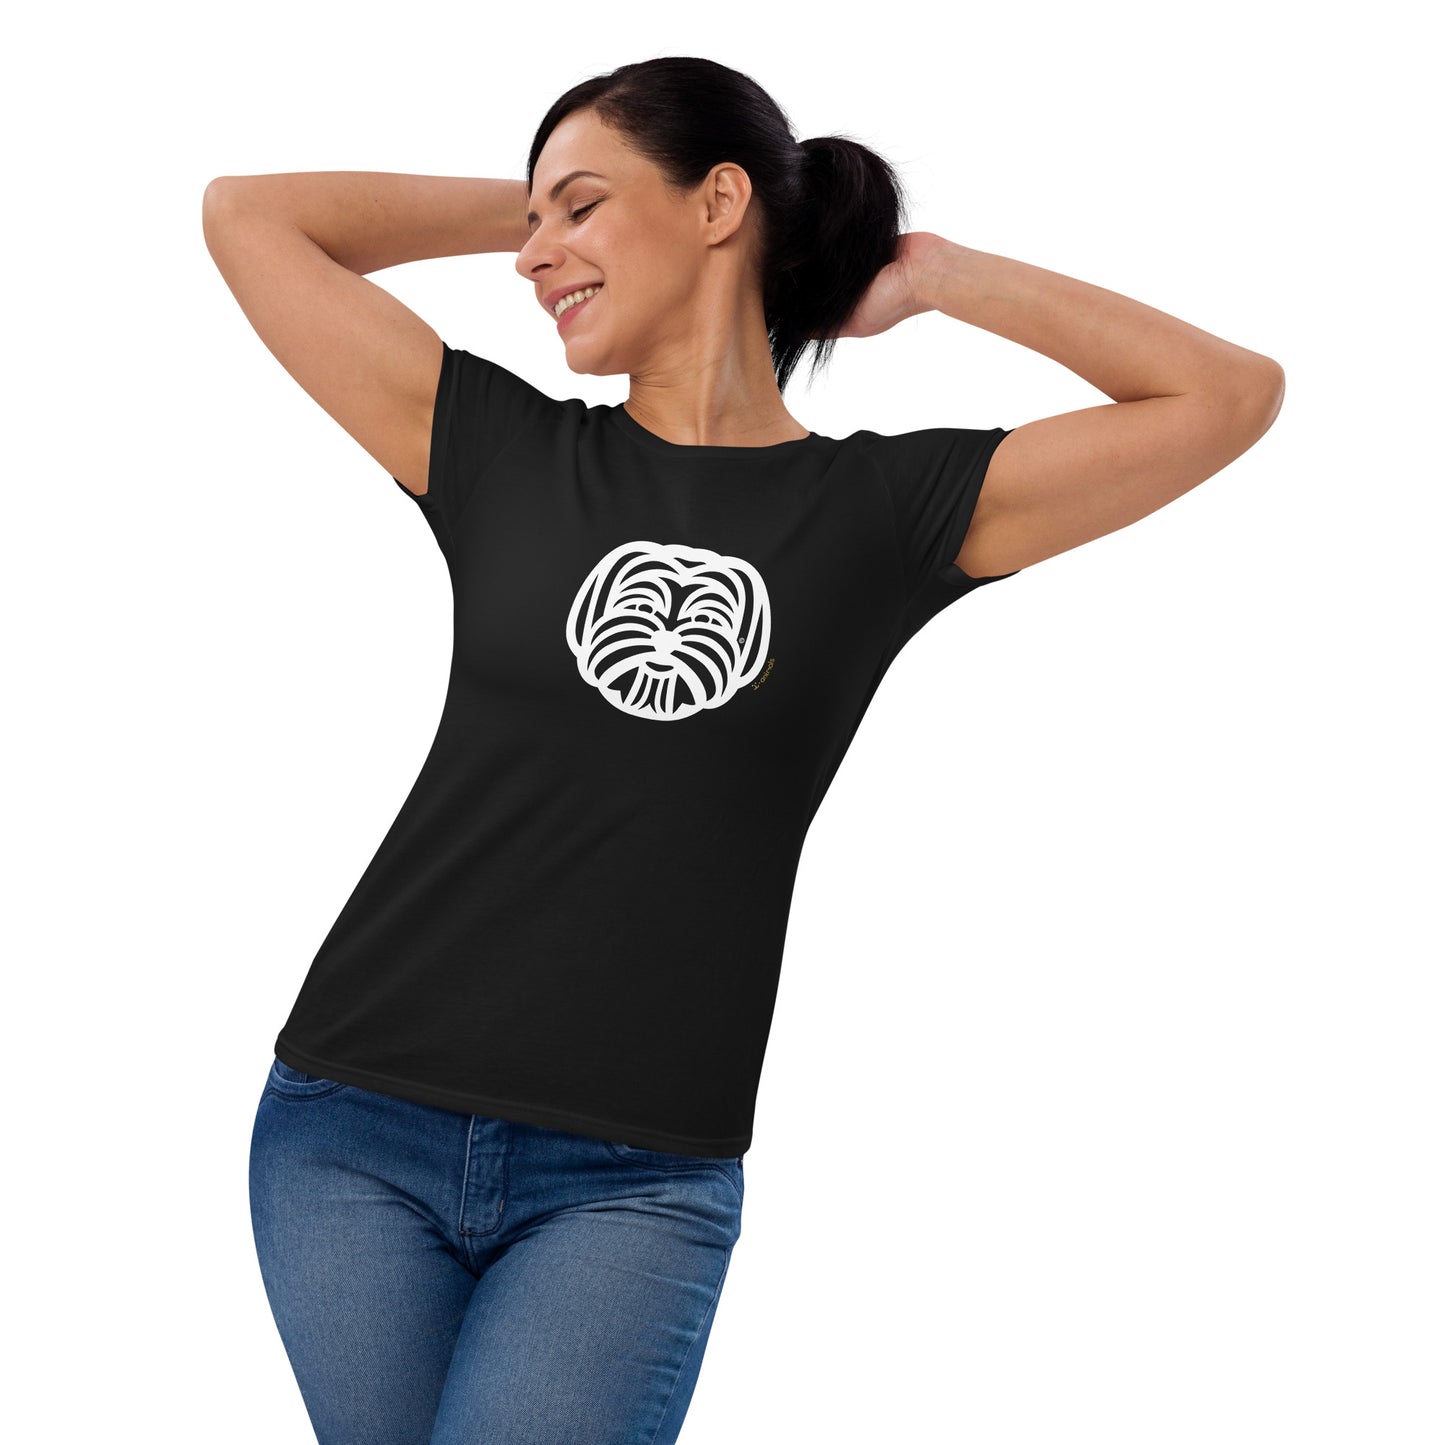 Camiseta feminina de manga curta - Maltês - Tribal - i-animals